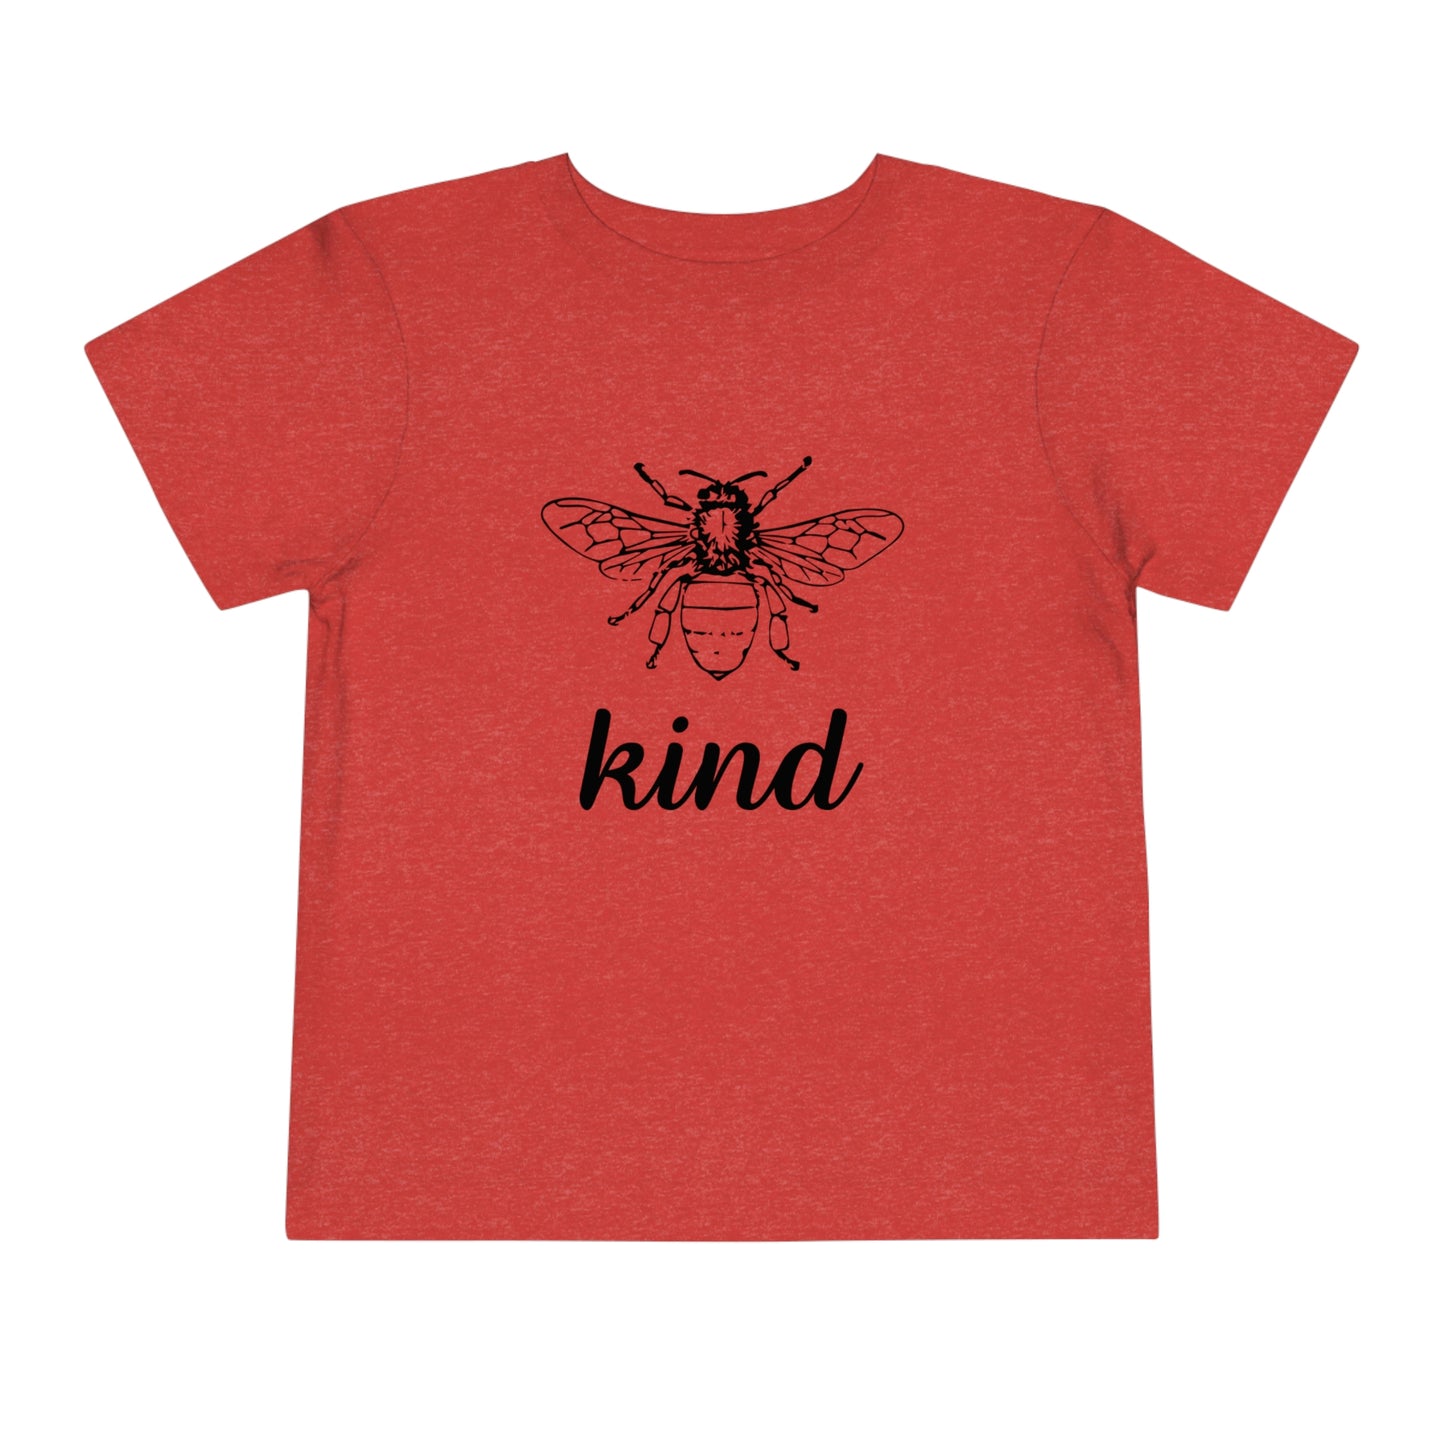 "Bee Kind" Toddler Short Sleeve Tee (2T-5T)